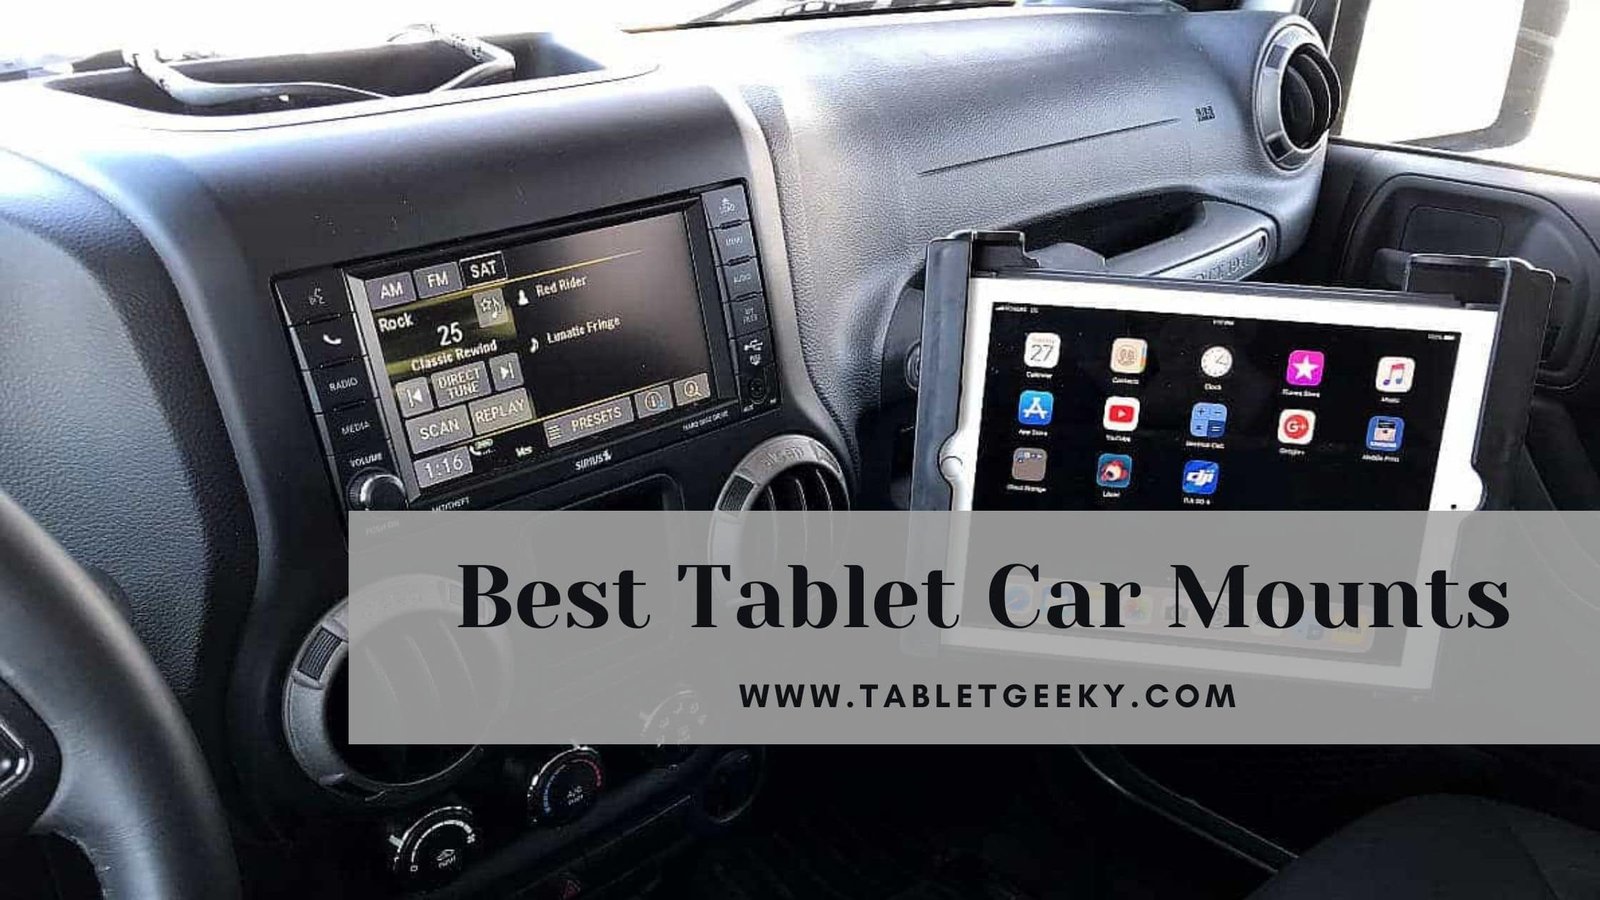 iKross Tablet Holder for Car, 360 Degree Headrest Mount for iPad Pro Mini  Kindle Samsung Galaxy Tab